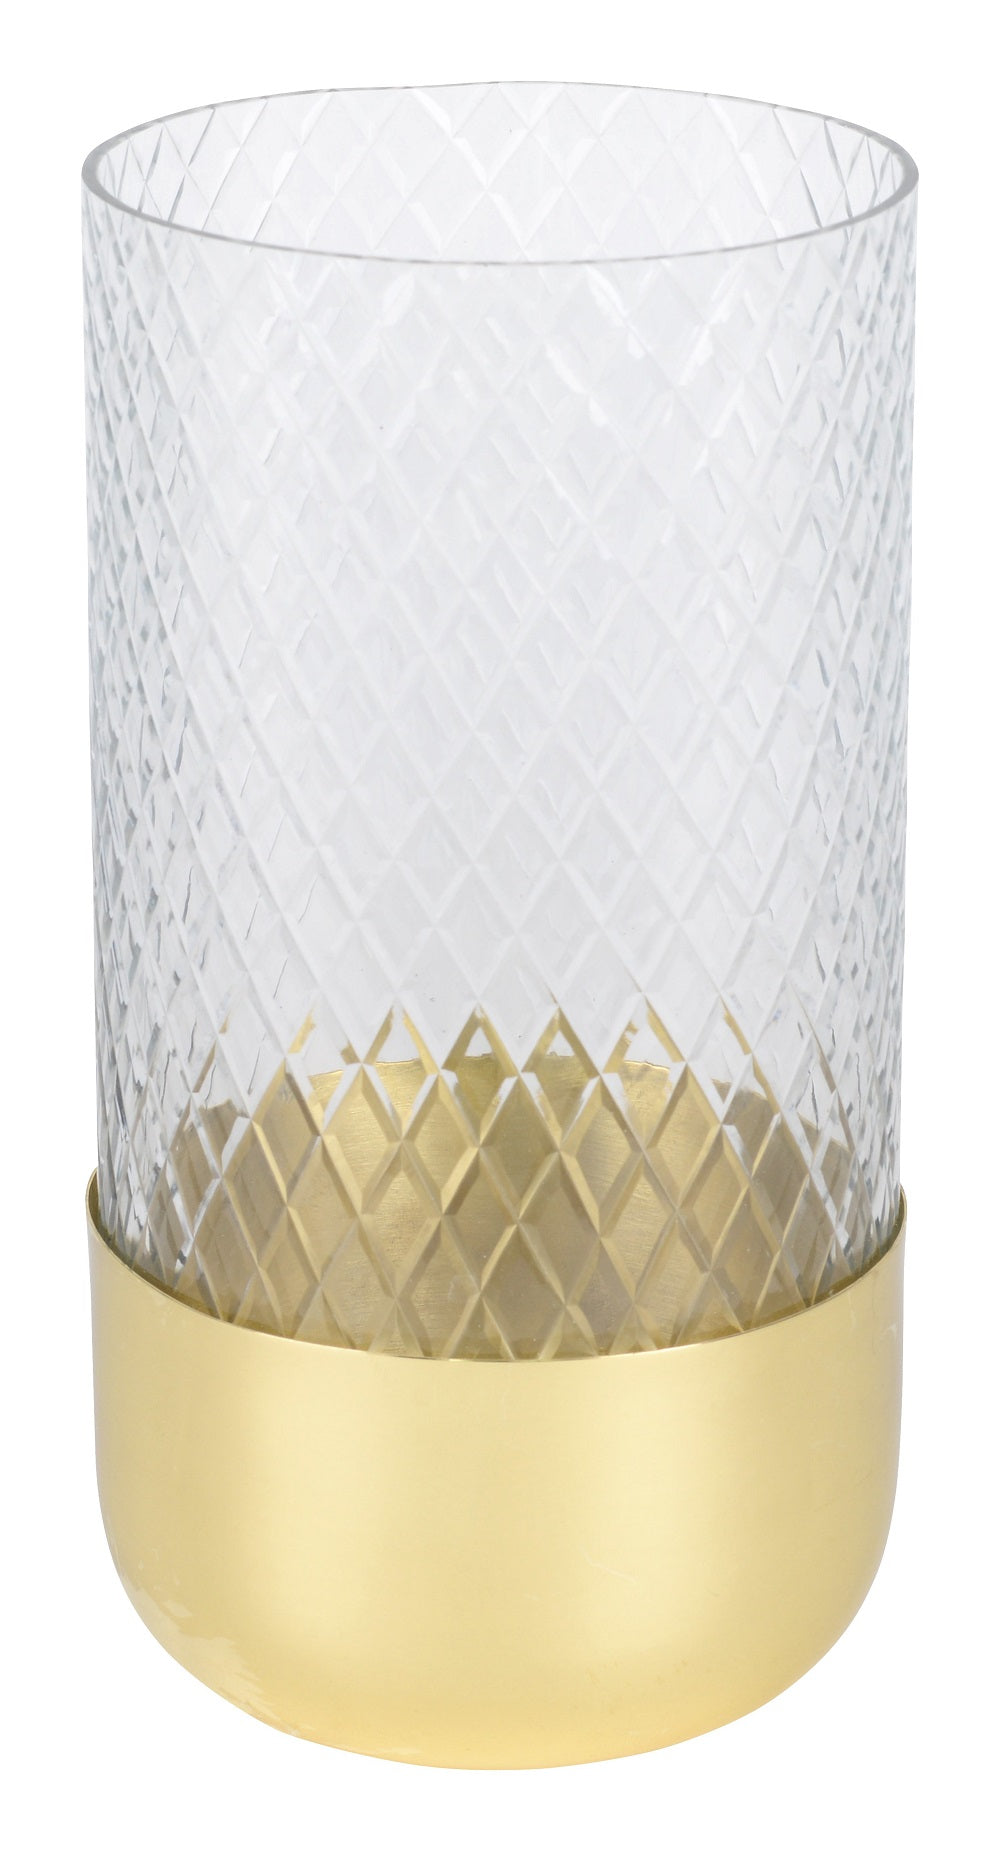 Windlicht Deko Vase Glas/Metall klar/gold Marylebone 15,5cm